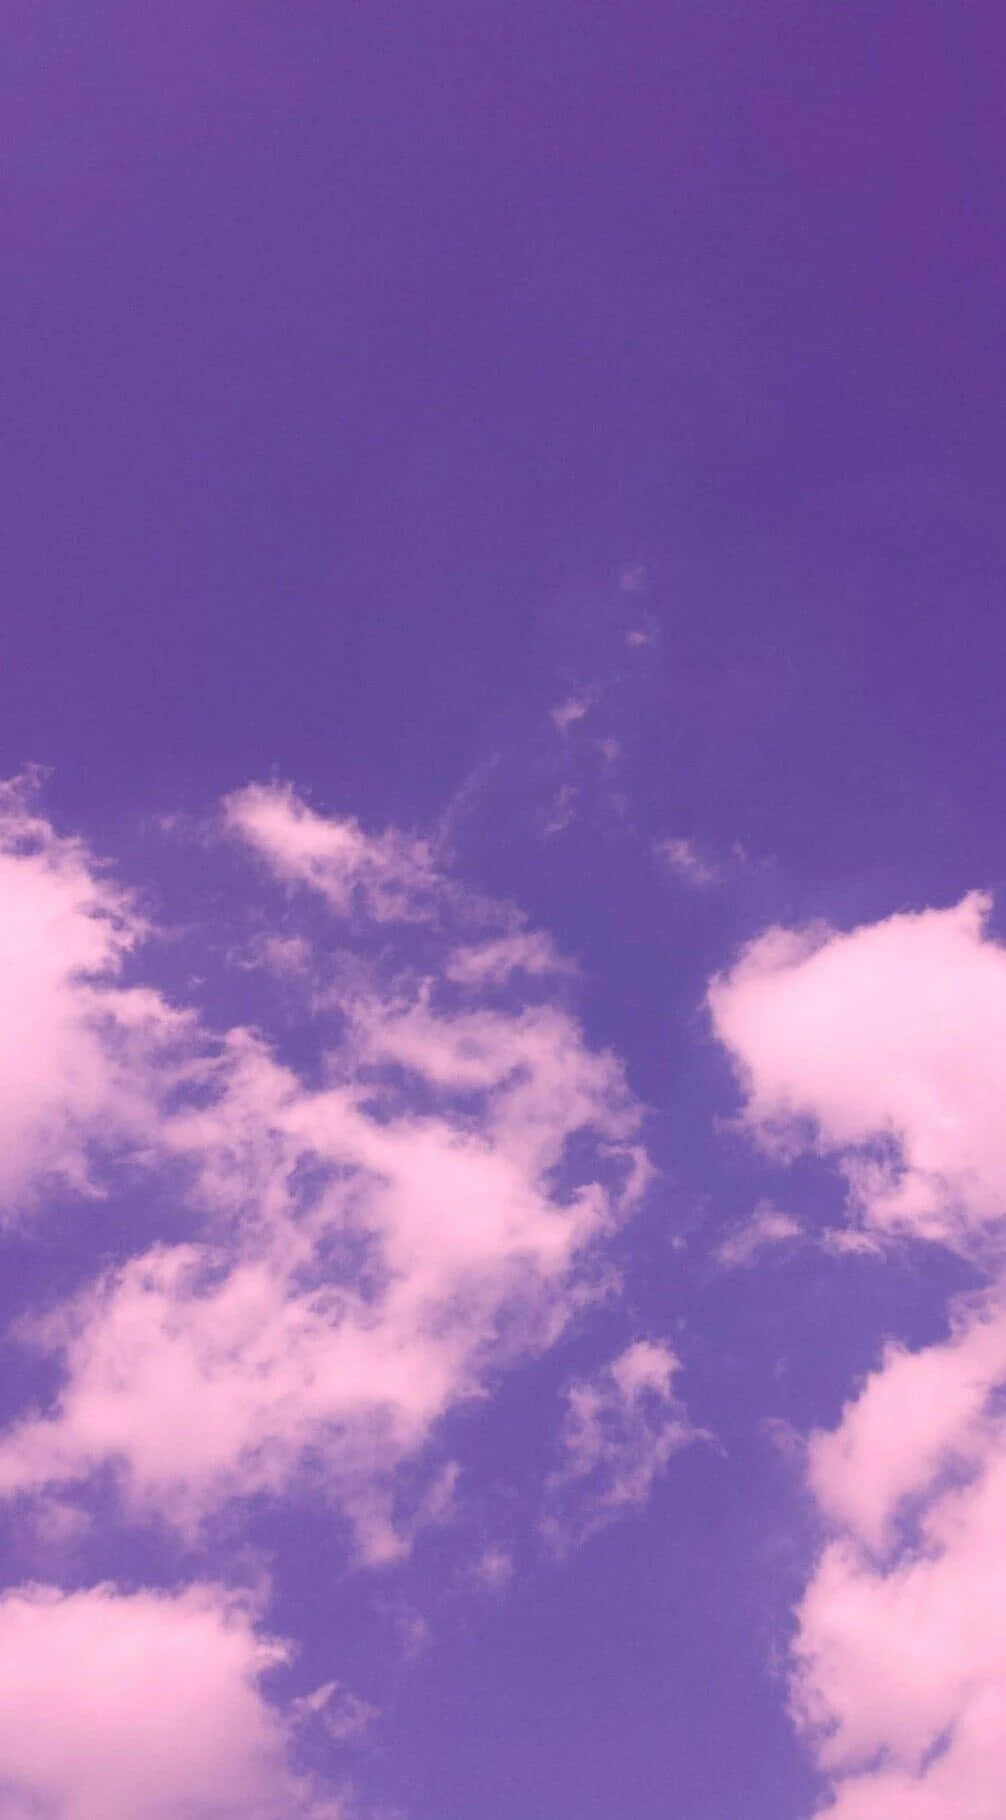 Vintage Cloudy Lavender Pastel Purple Aesthetic Background